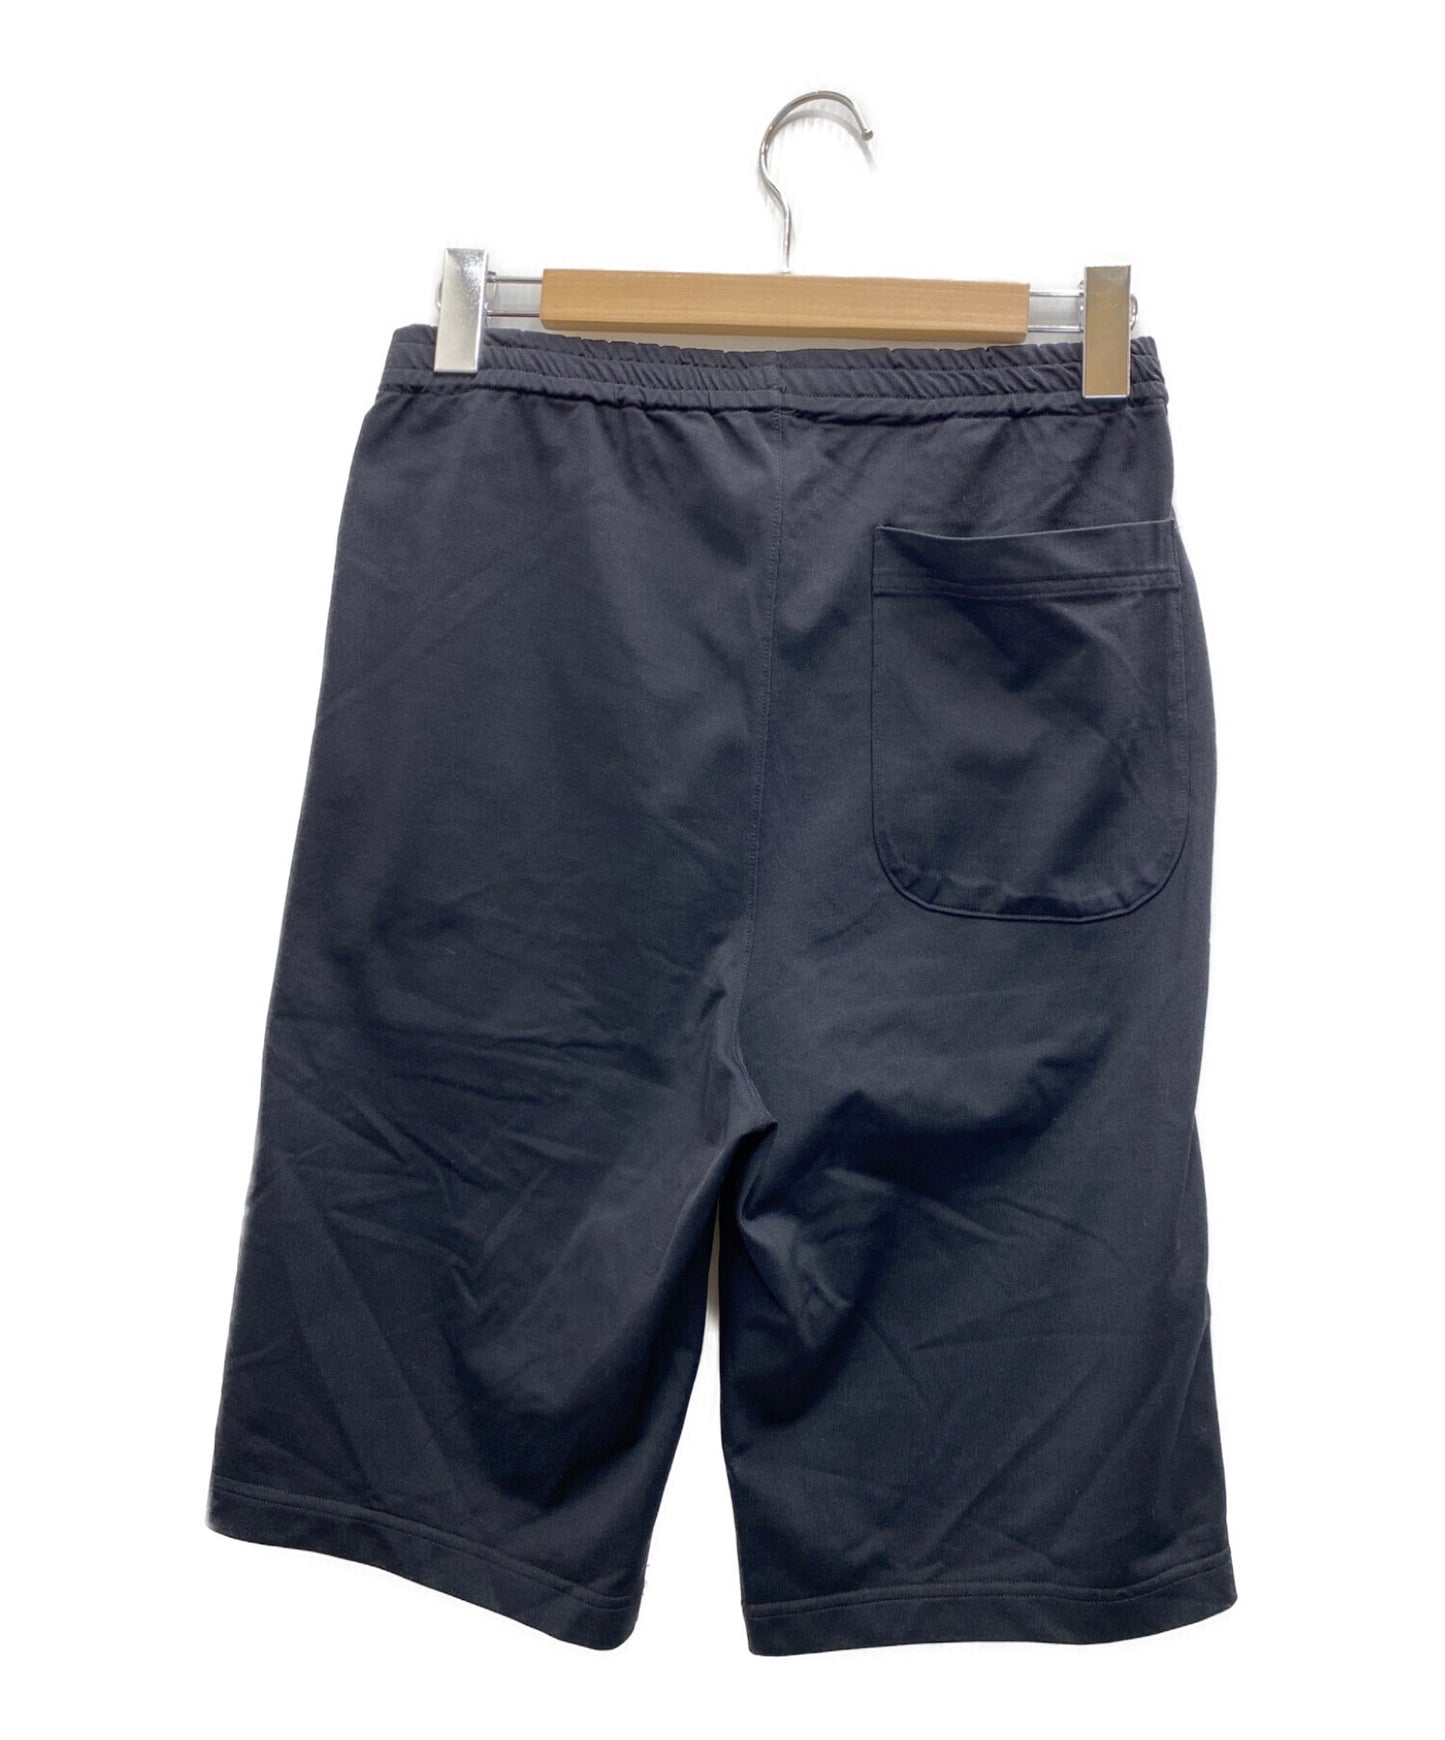 Yohji Yamamoto Pour Homme Nylon Jersey Shorts He-T10-631